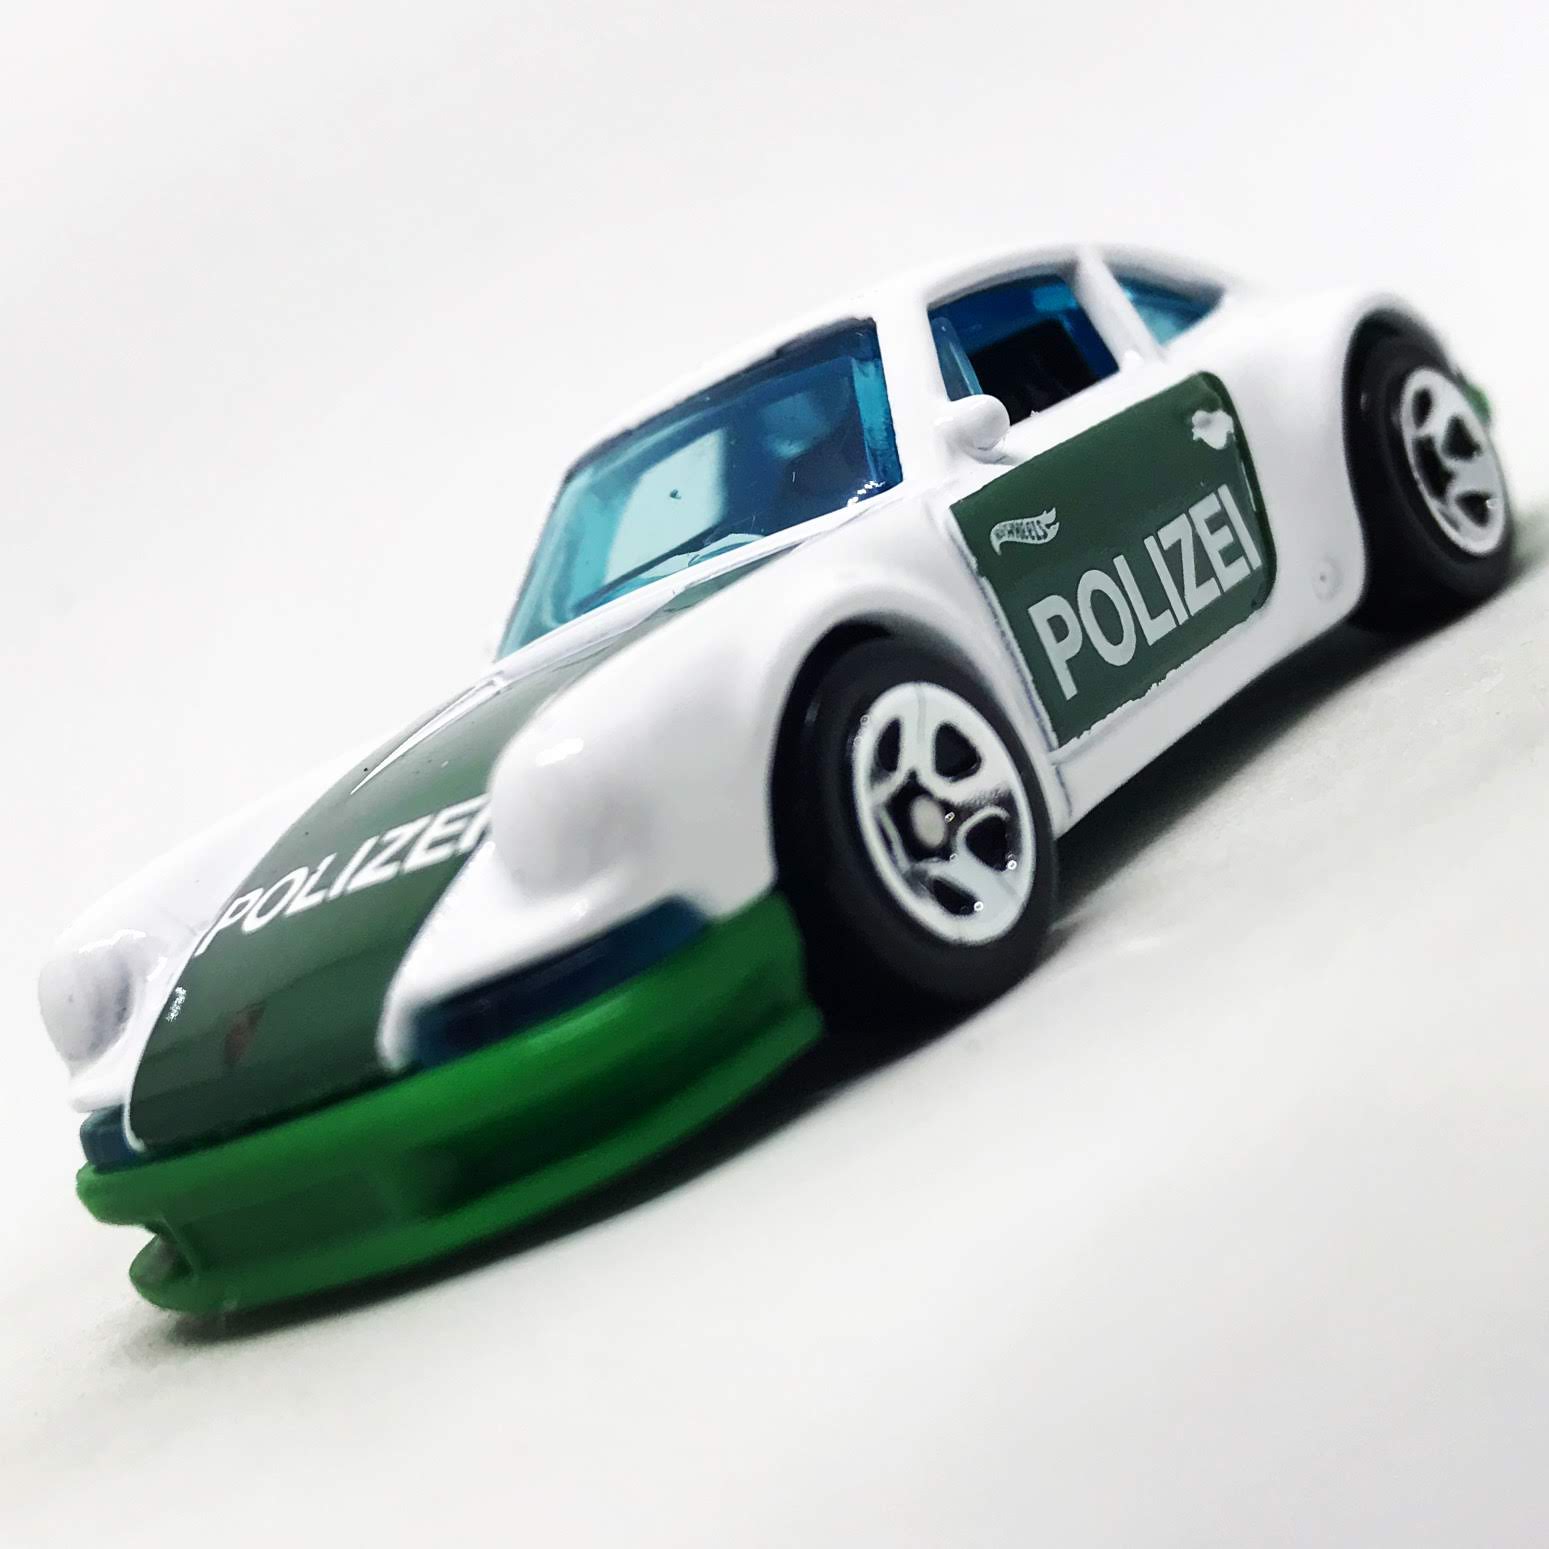 1971 Porsche 911 (2019 HW Rescue - Polizei Police) .